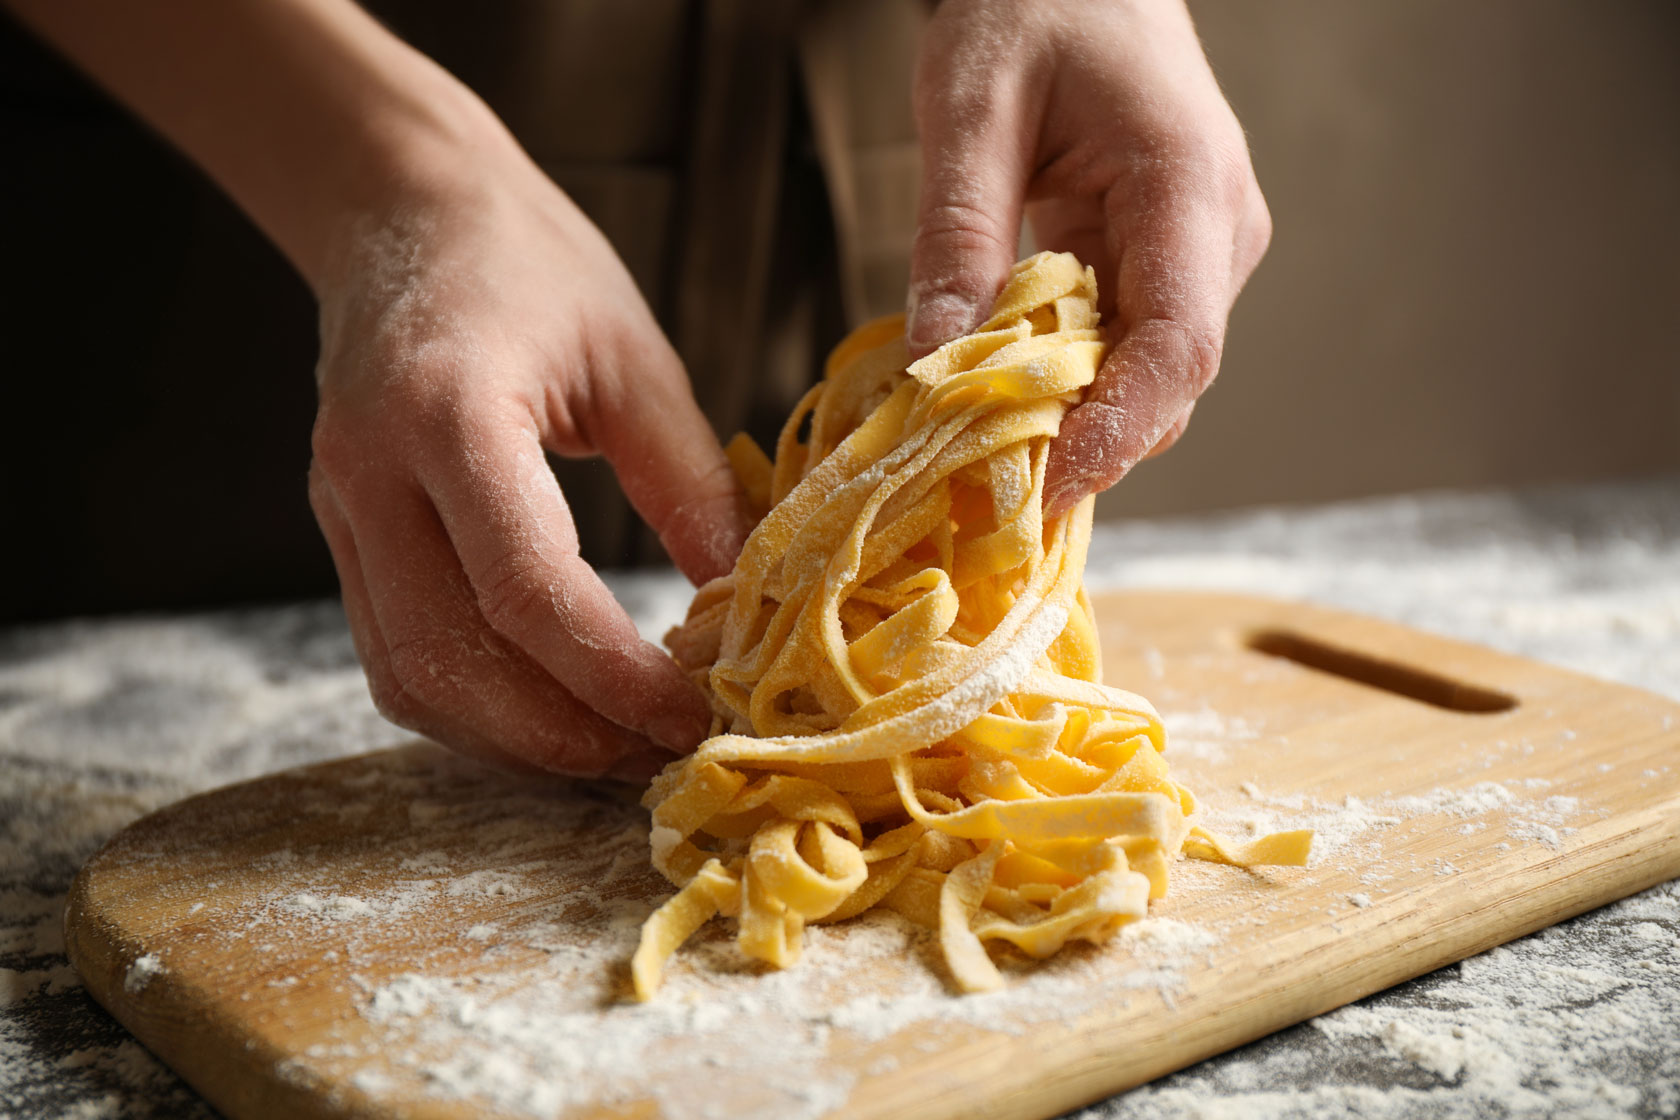 Woman preparing pasta at table, closeup view